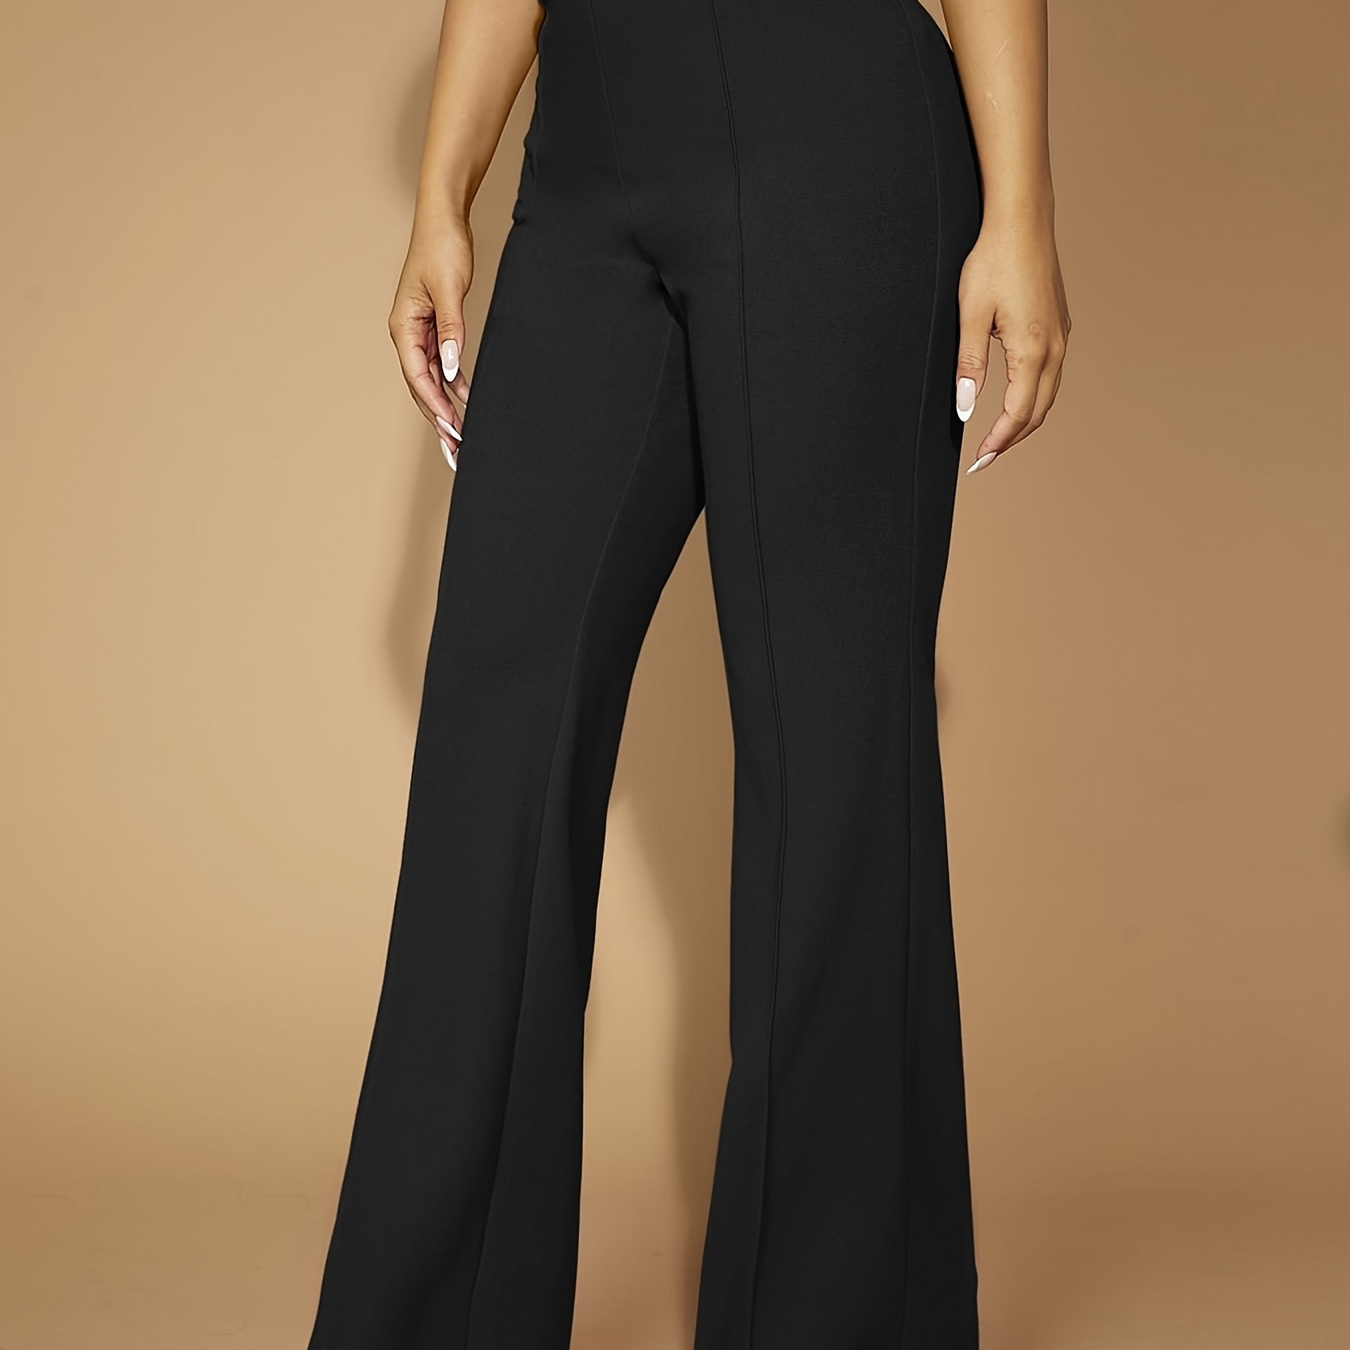 

Solid Color Flare Leg Slim Pants, Elegant High Waist Simple Pants For Office & Work, Women's Clothing